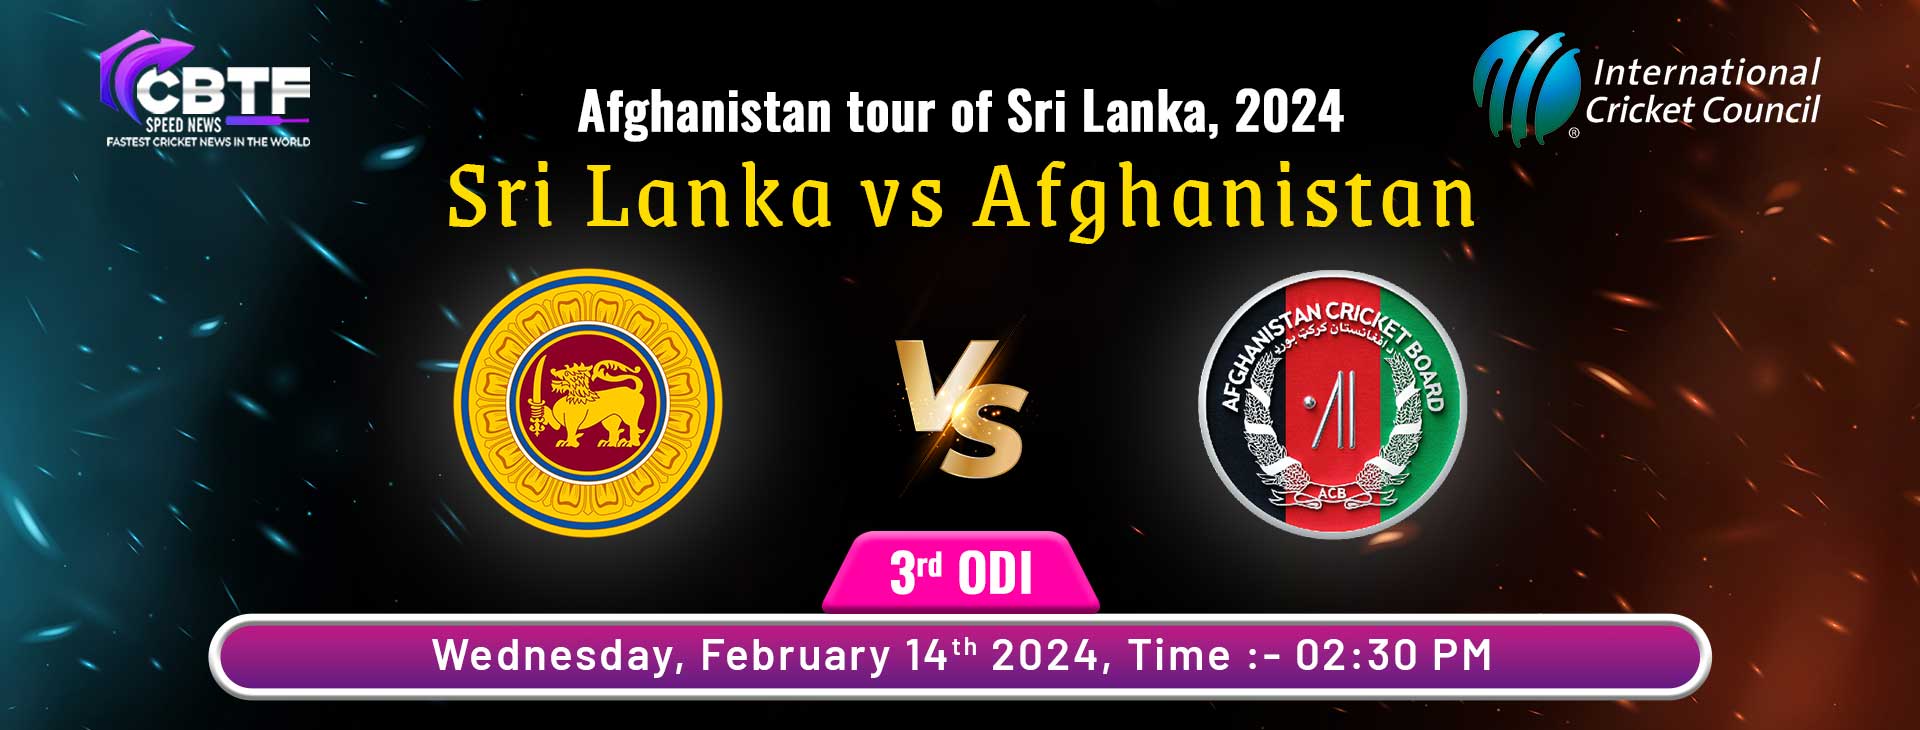 Afghanistan tour of Sri Lanka, 2024, Sri Lanka vs Afghanistan, 3rd ODI